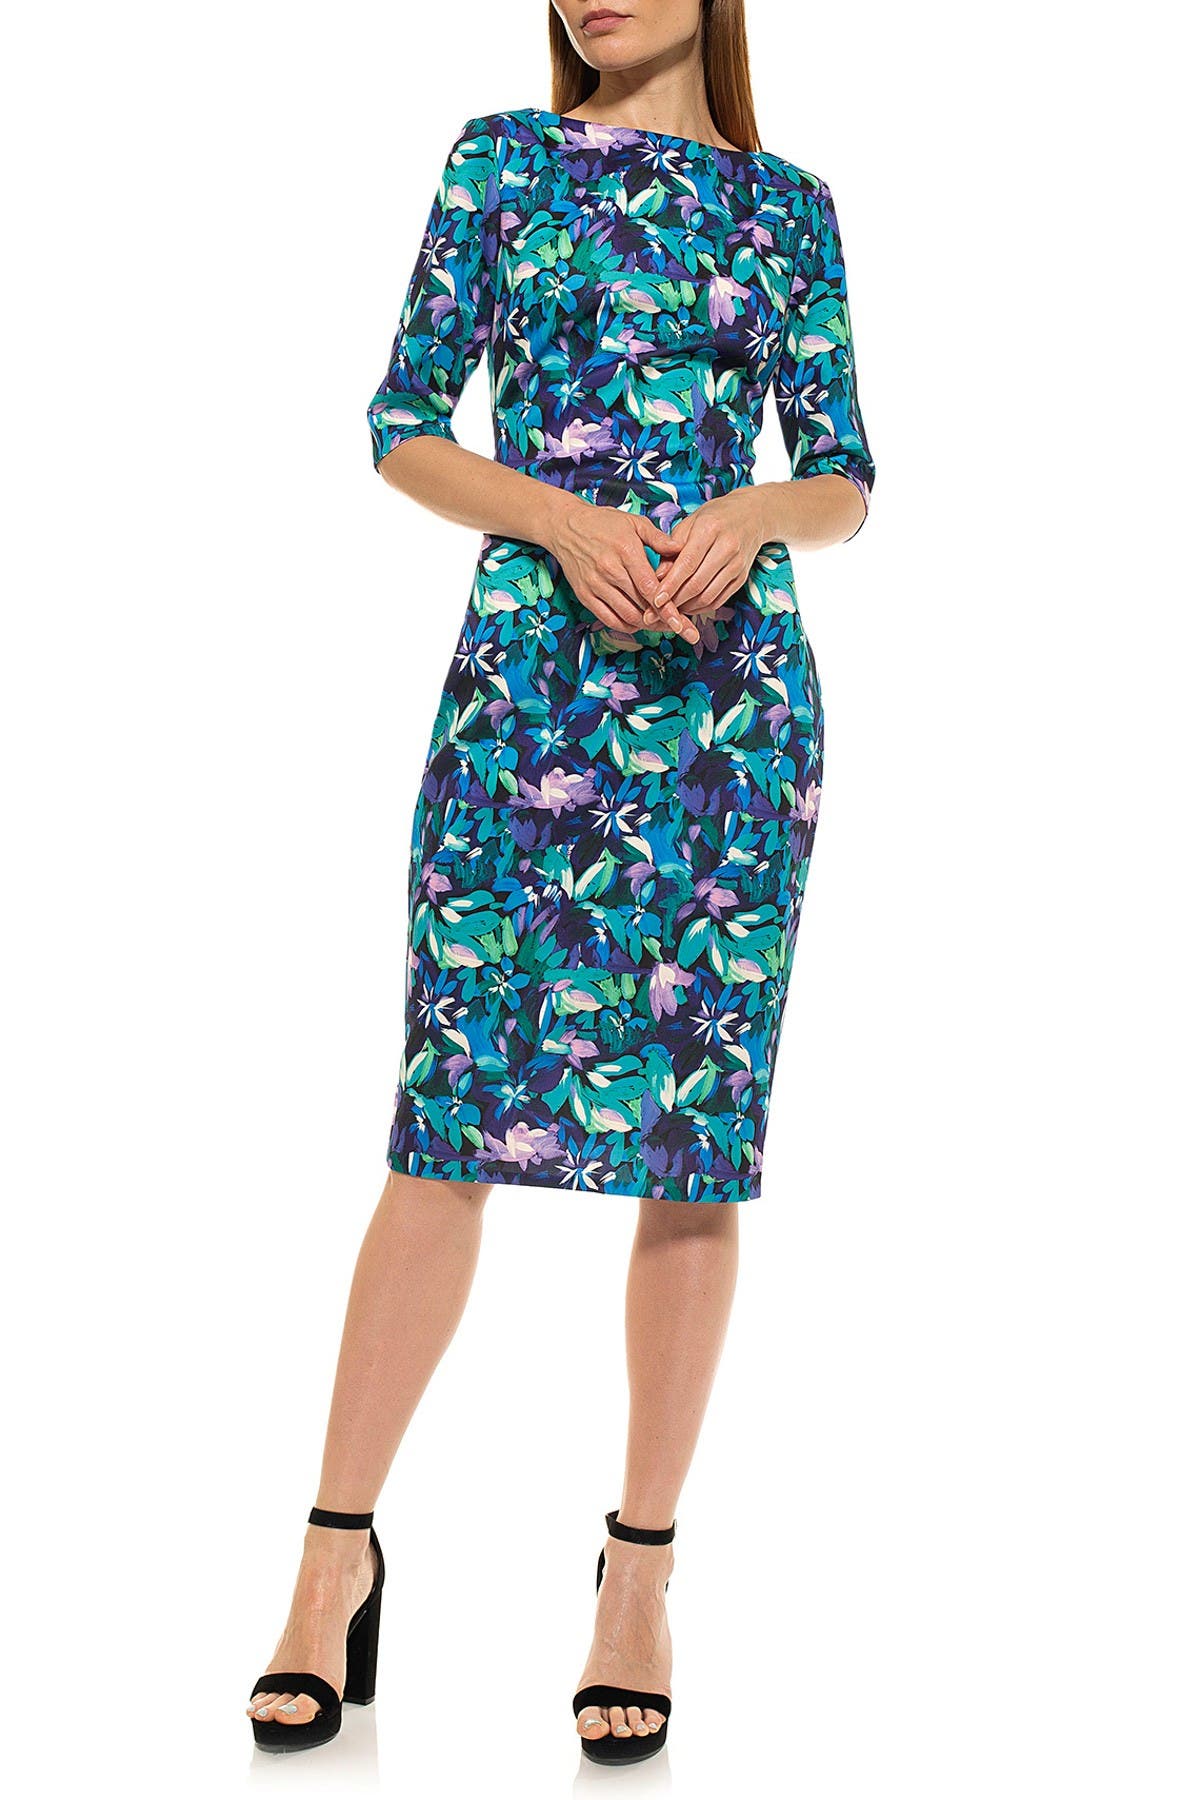 Alexia Admor Boatneck Sheath Dress In Turquoise/aqua9